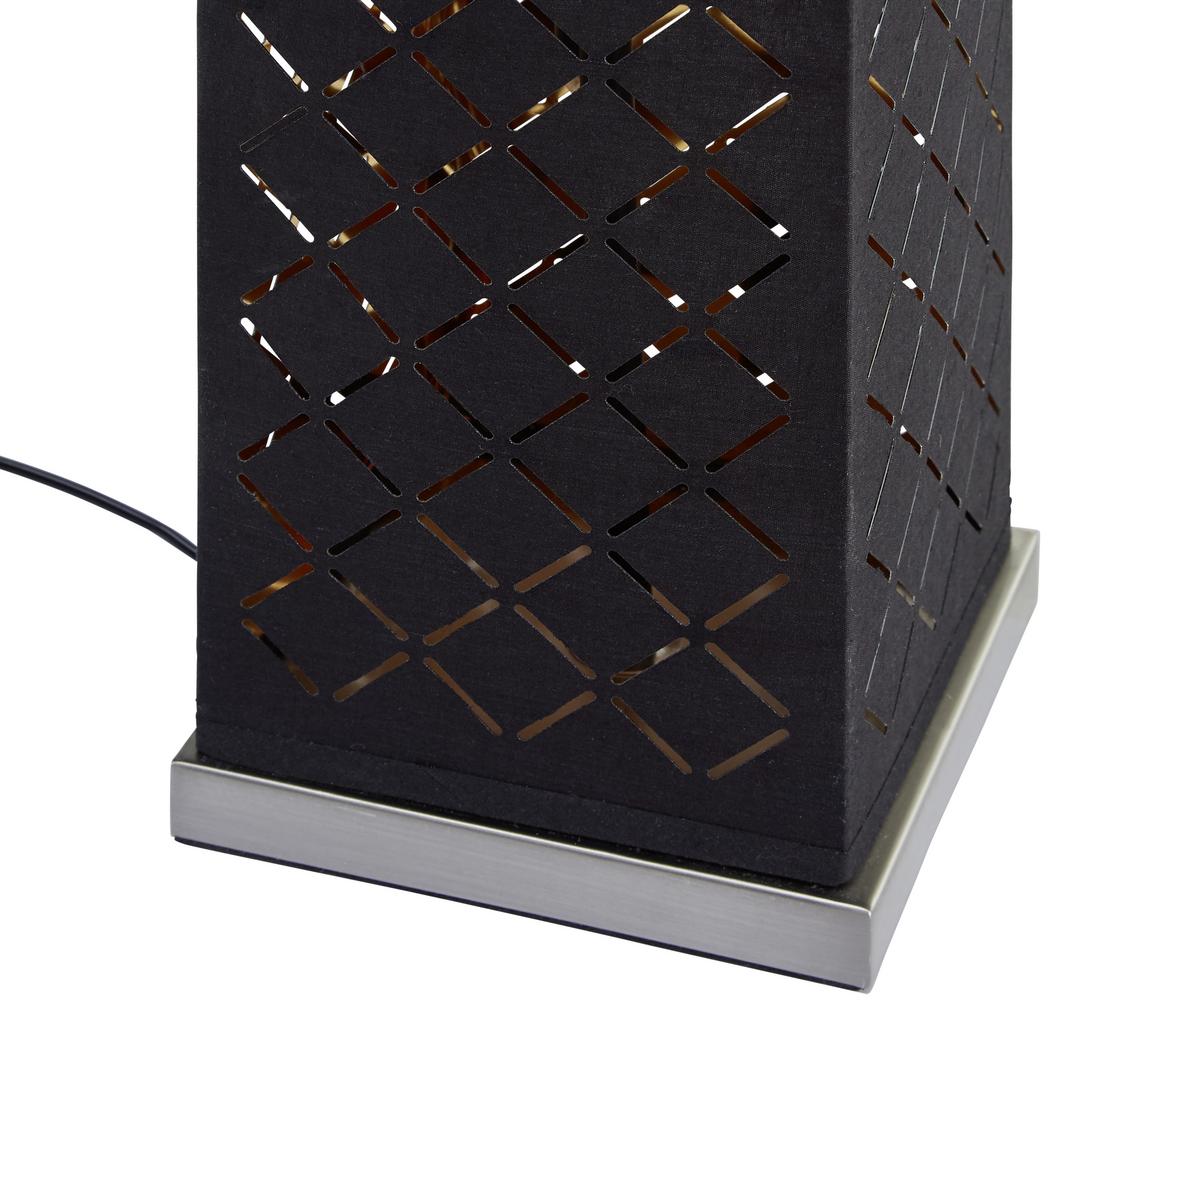 Stojací Lampa Elin V: 118cm, 40 Watt - černá/barvy zlata, Lifestyle, kov/textil (15/118cm) - Modern Living